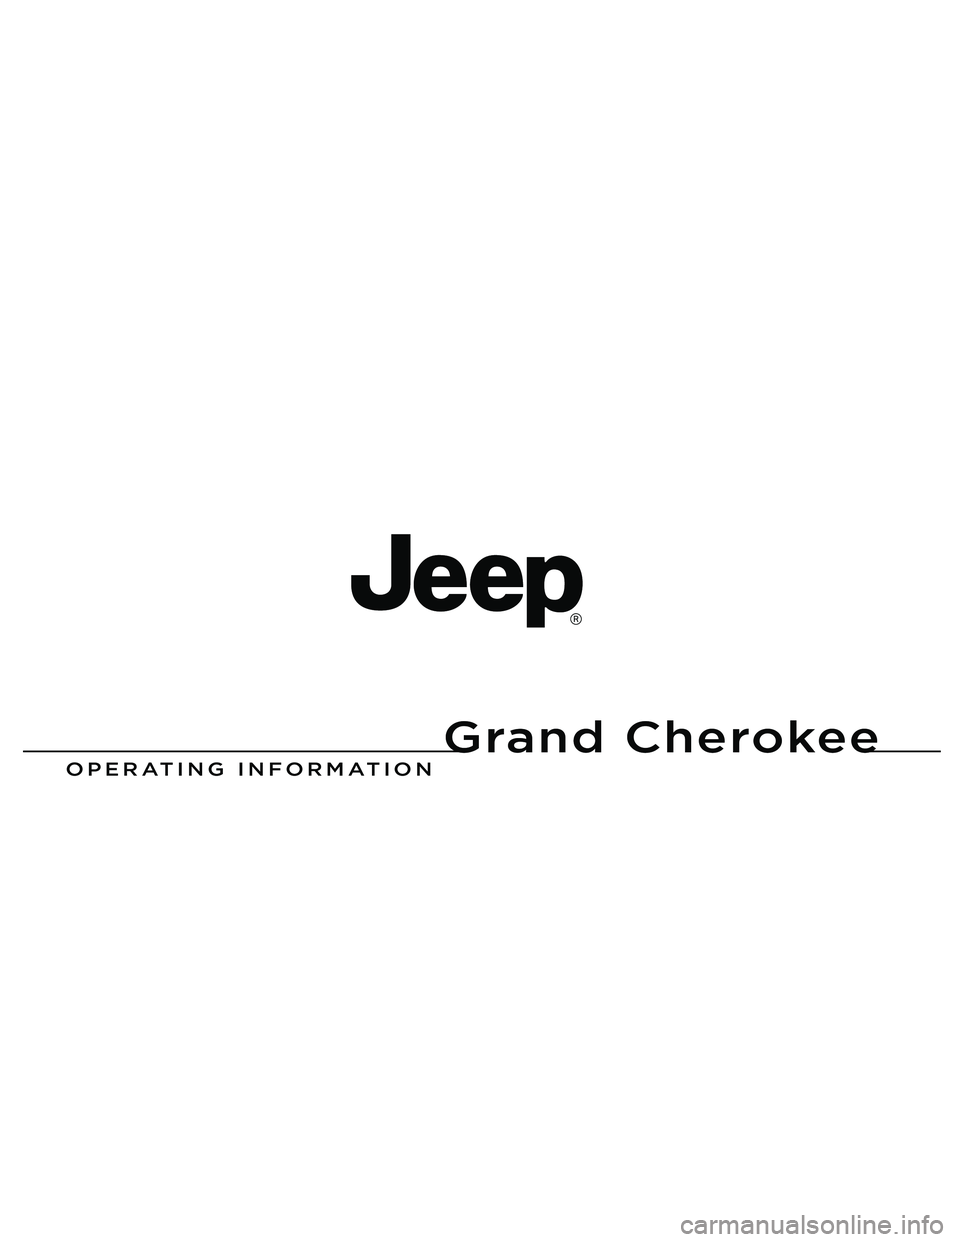 JEEP GRAND CHEROKEE 2010  Owner handbook (in English) Grand Cherokee
Chrysler Group LLC
OPERATING IN\fORMATION
Grand Cherokee
13WK741-126-ENG-ABPrinted in Europe 13
1386316_EE_Jeep_Gr_Cherokee_OM.indd   1 